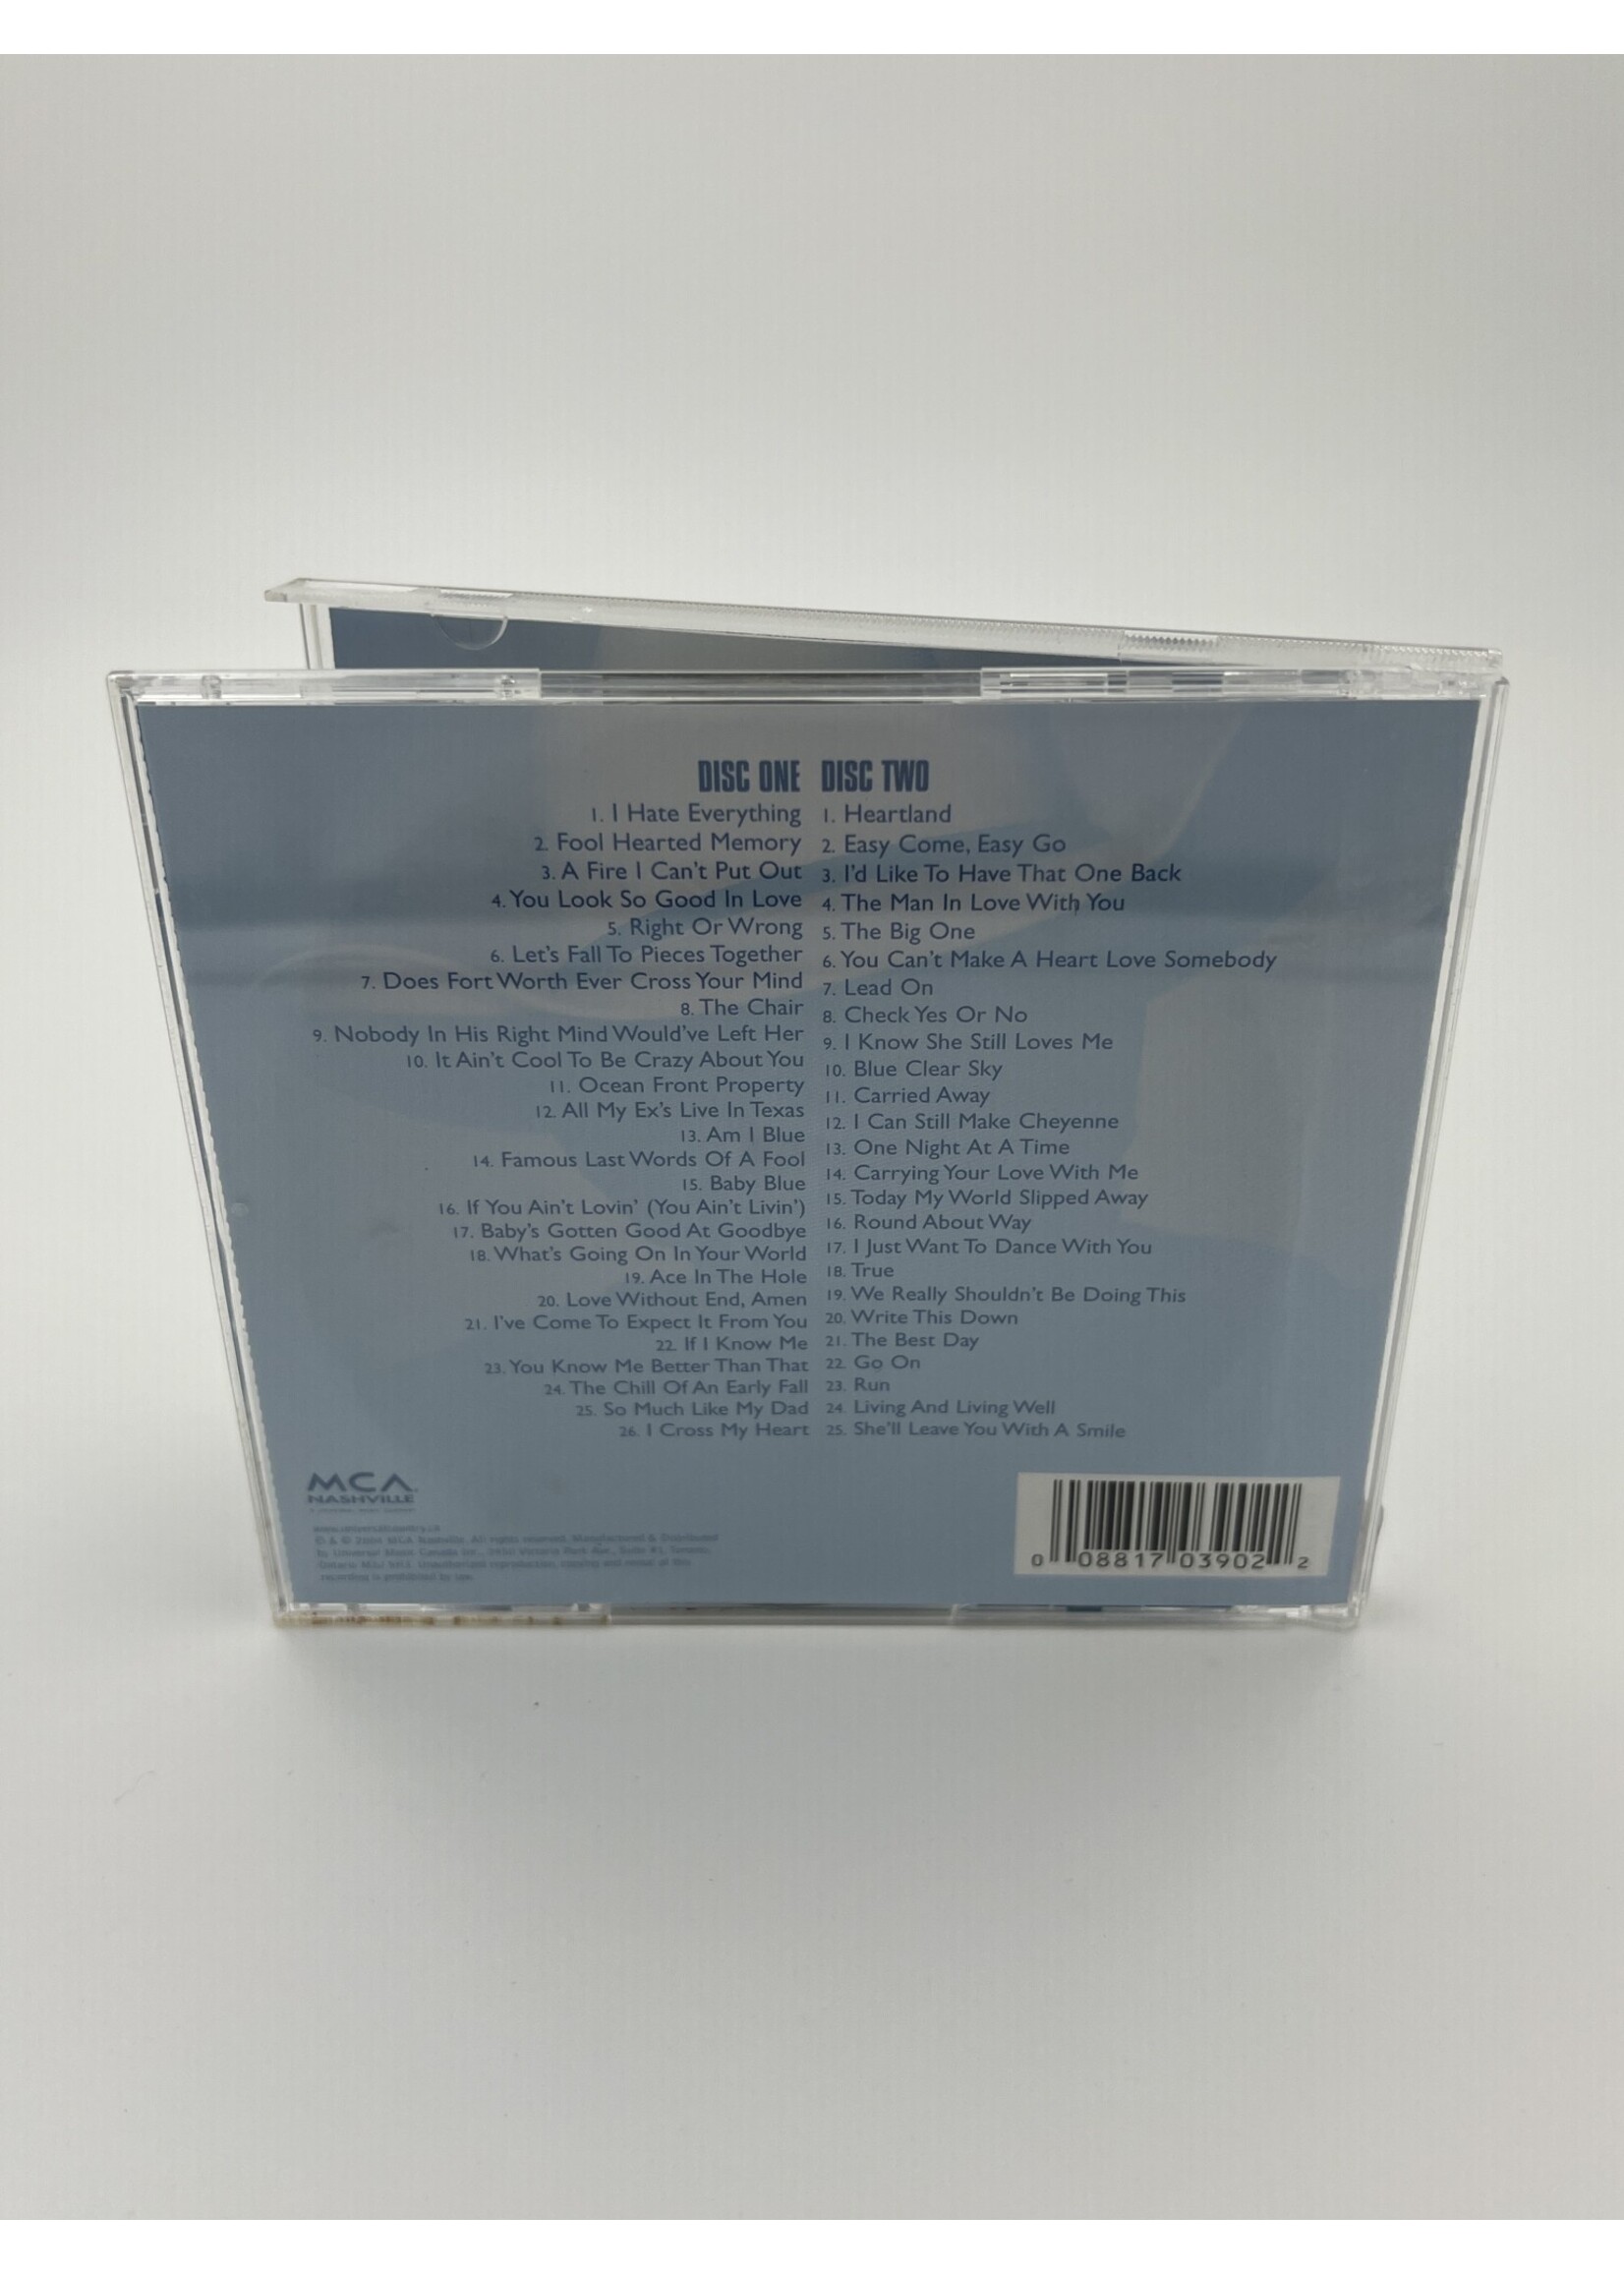 CD   George Strait 50 Number Ones 2 CD